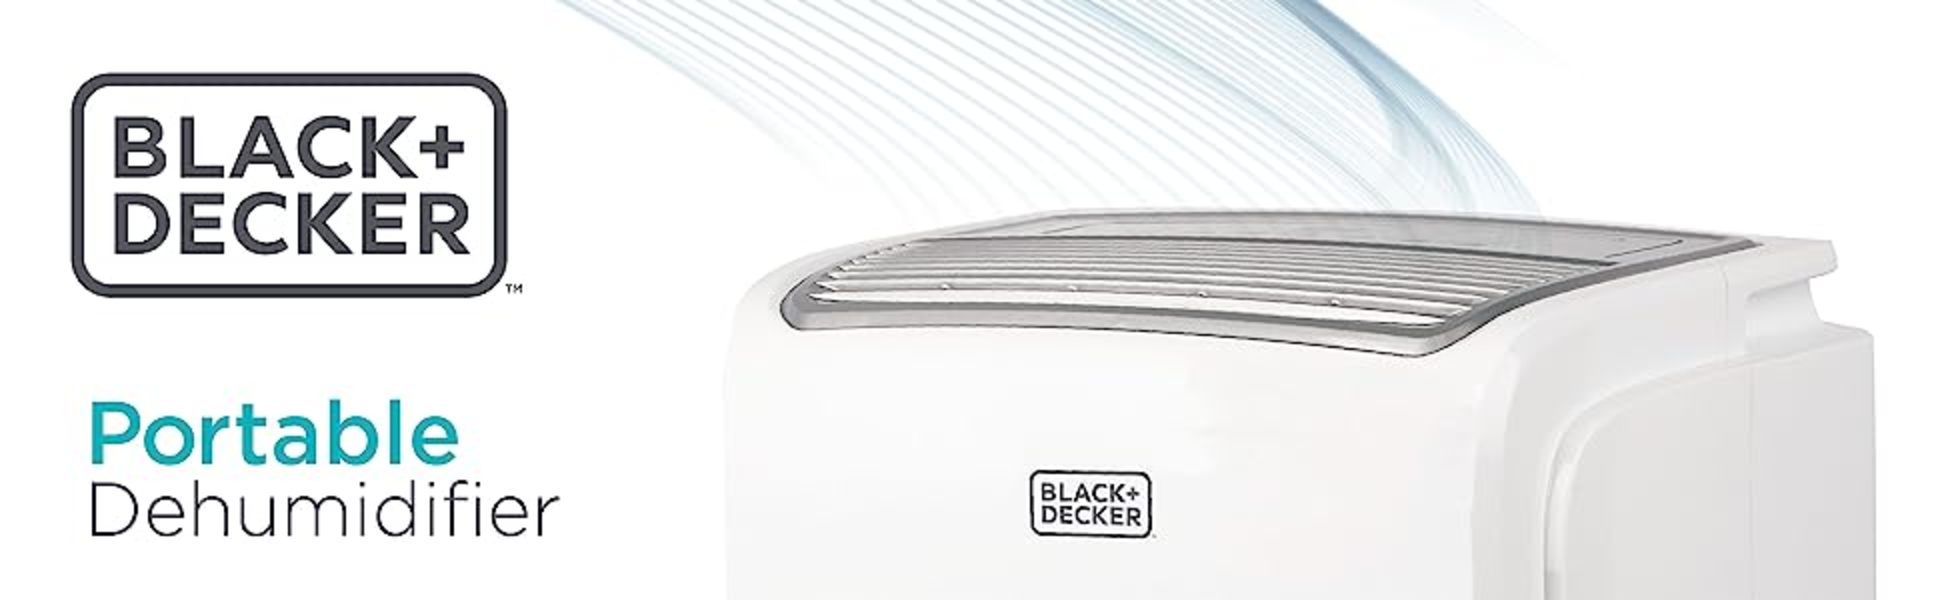 Black+Decker BDT50WTB Review